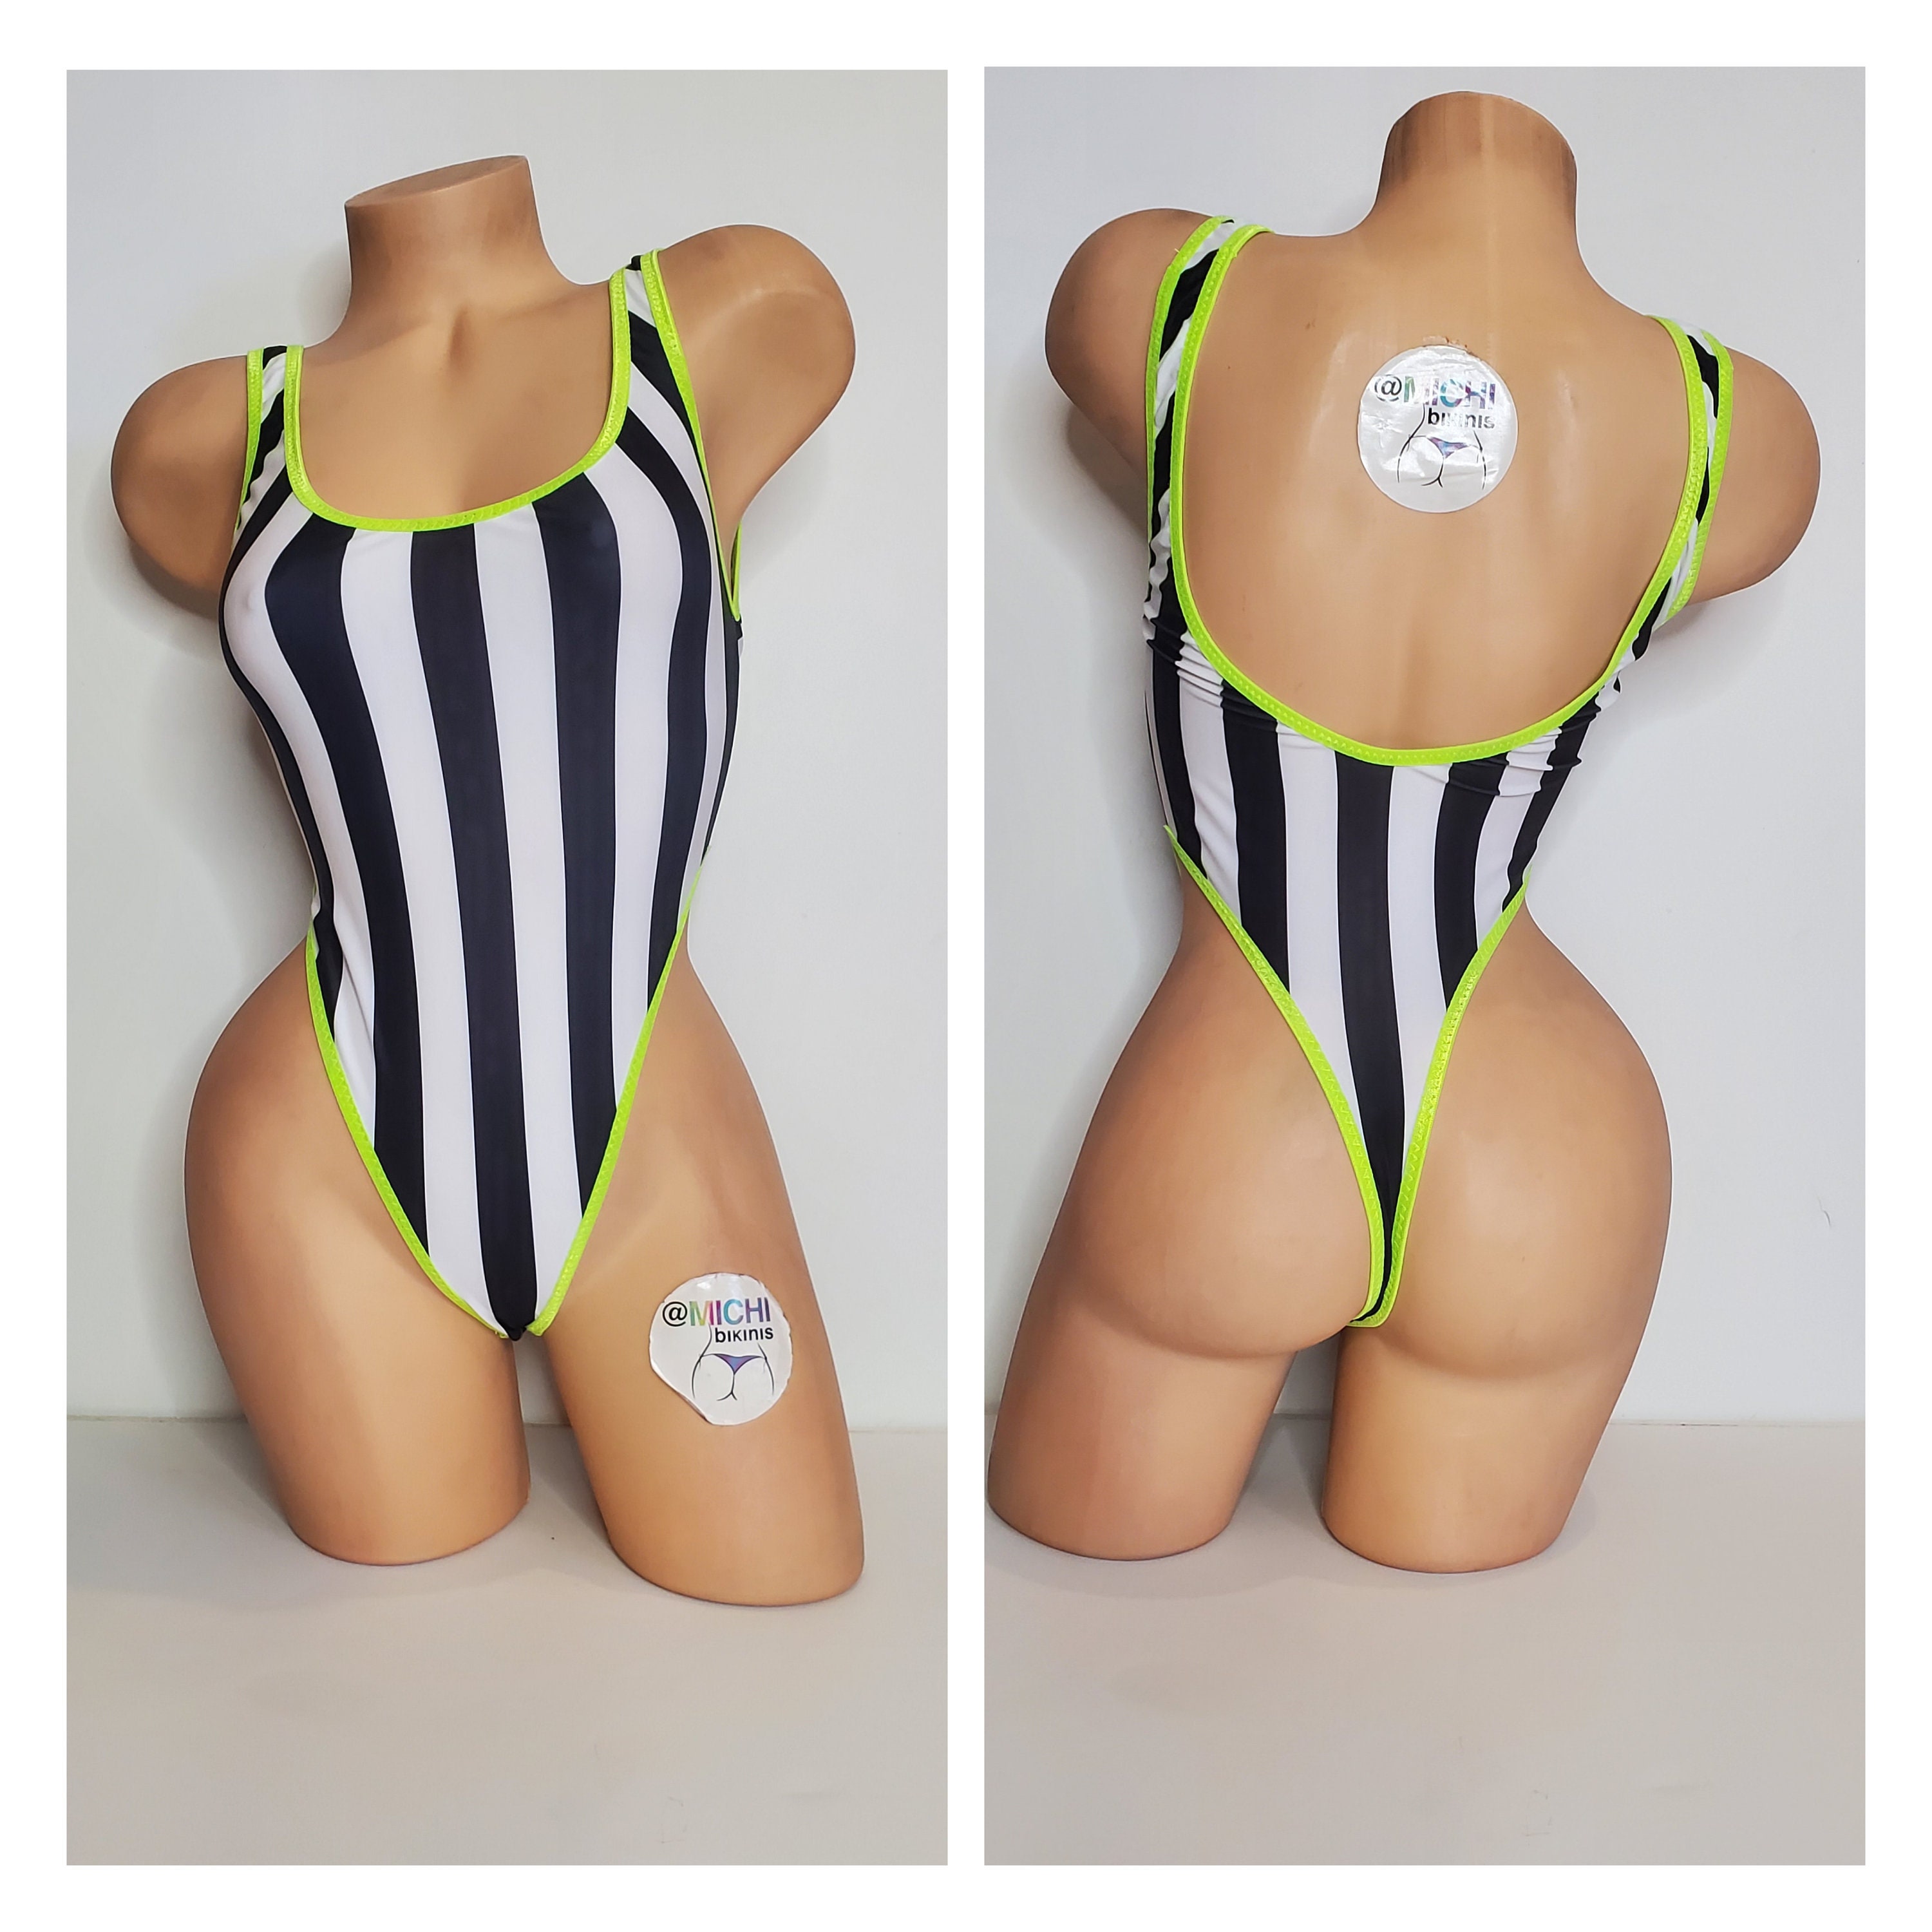 Lace Insert Suspender Swimsuit - ShopperBoard